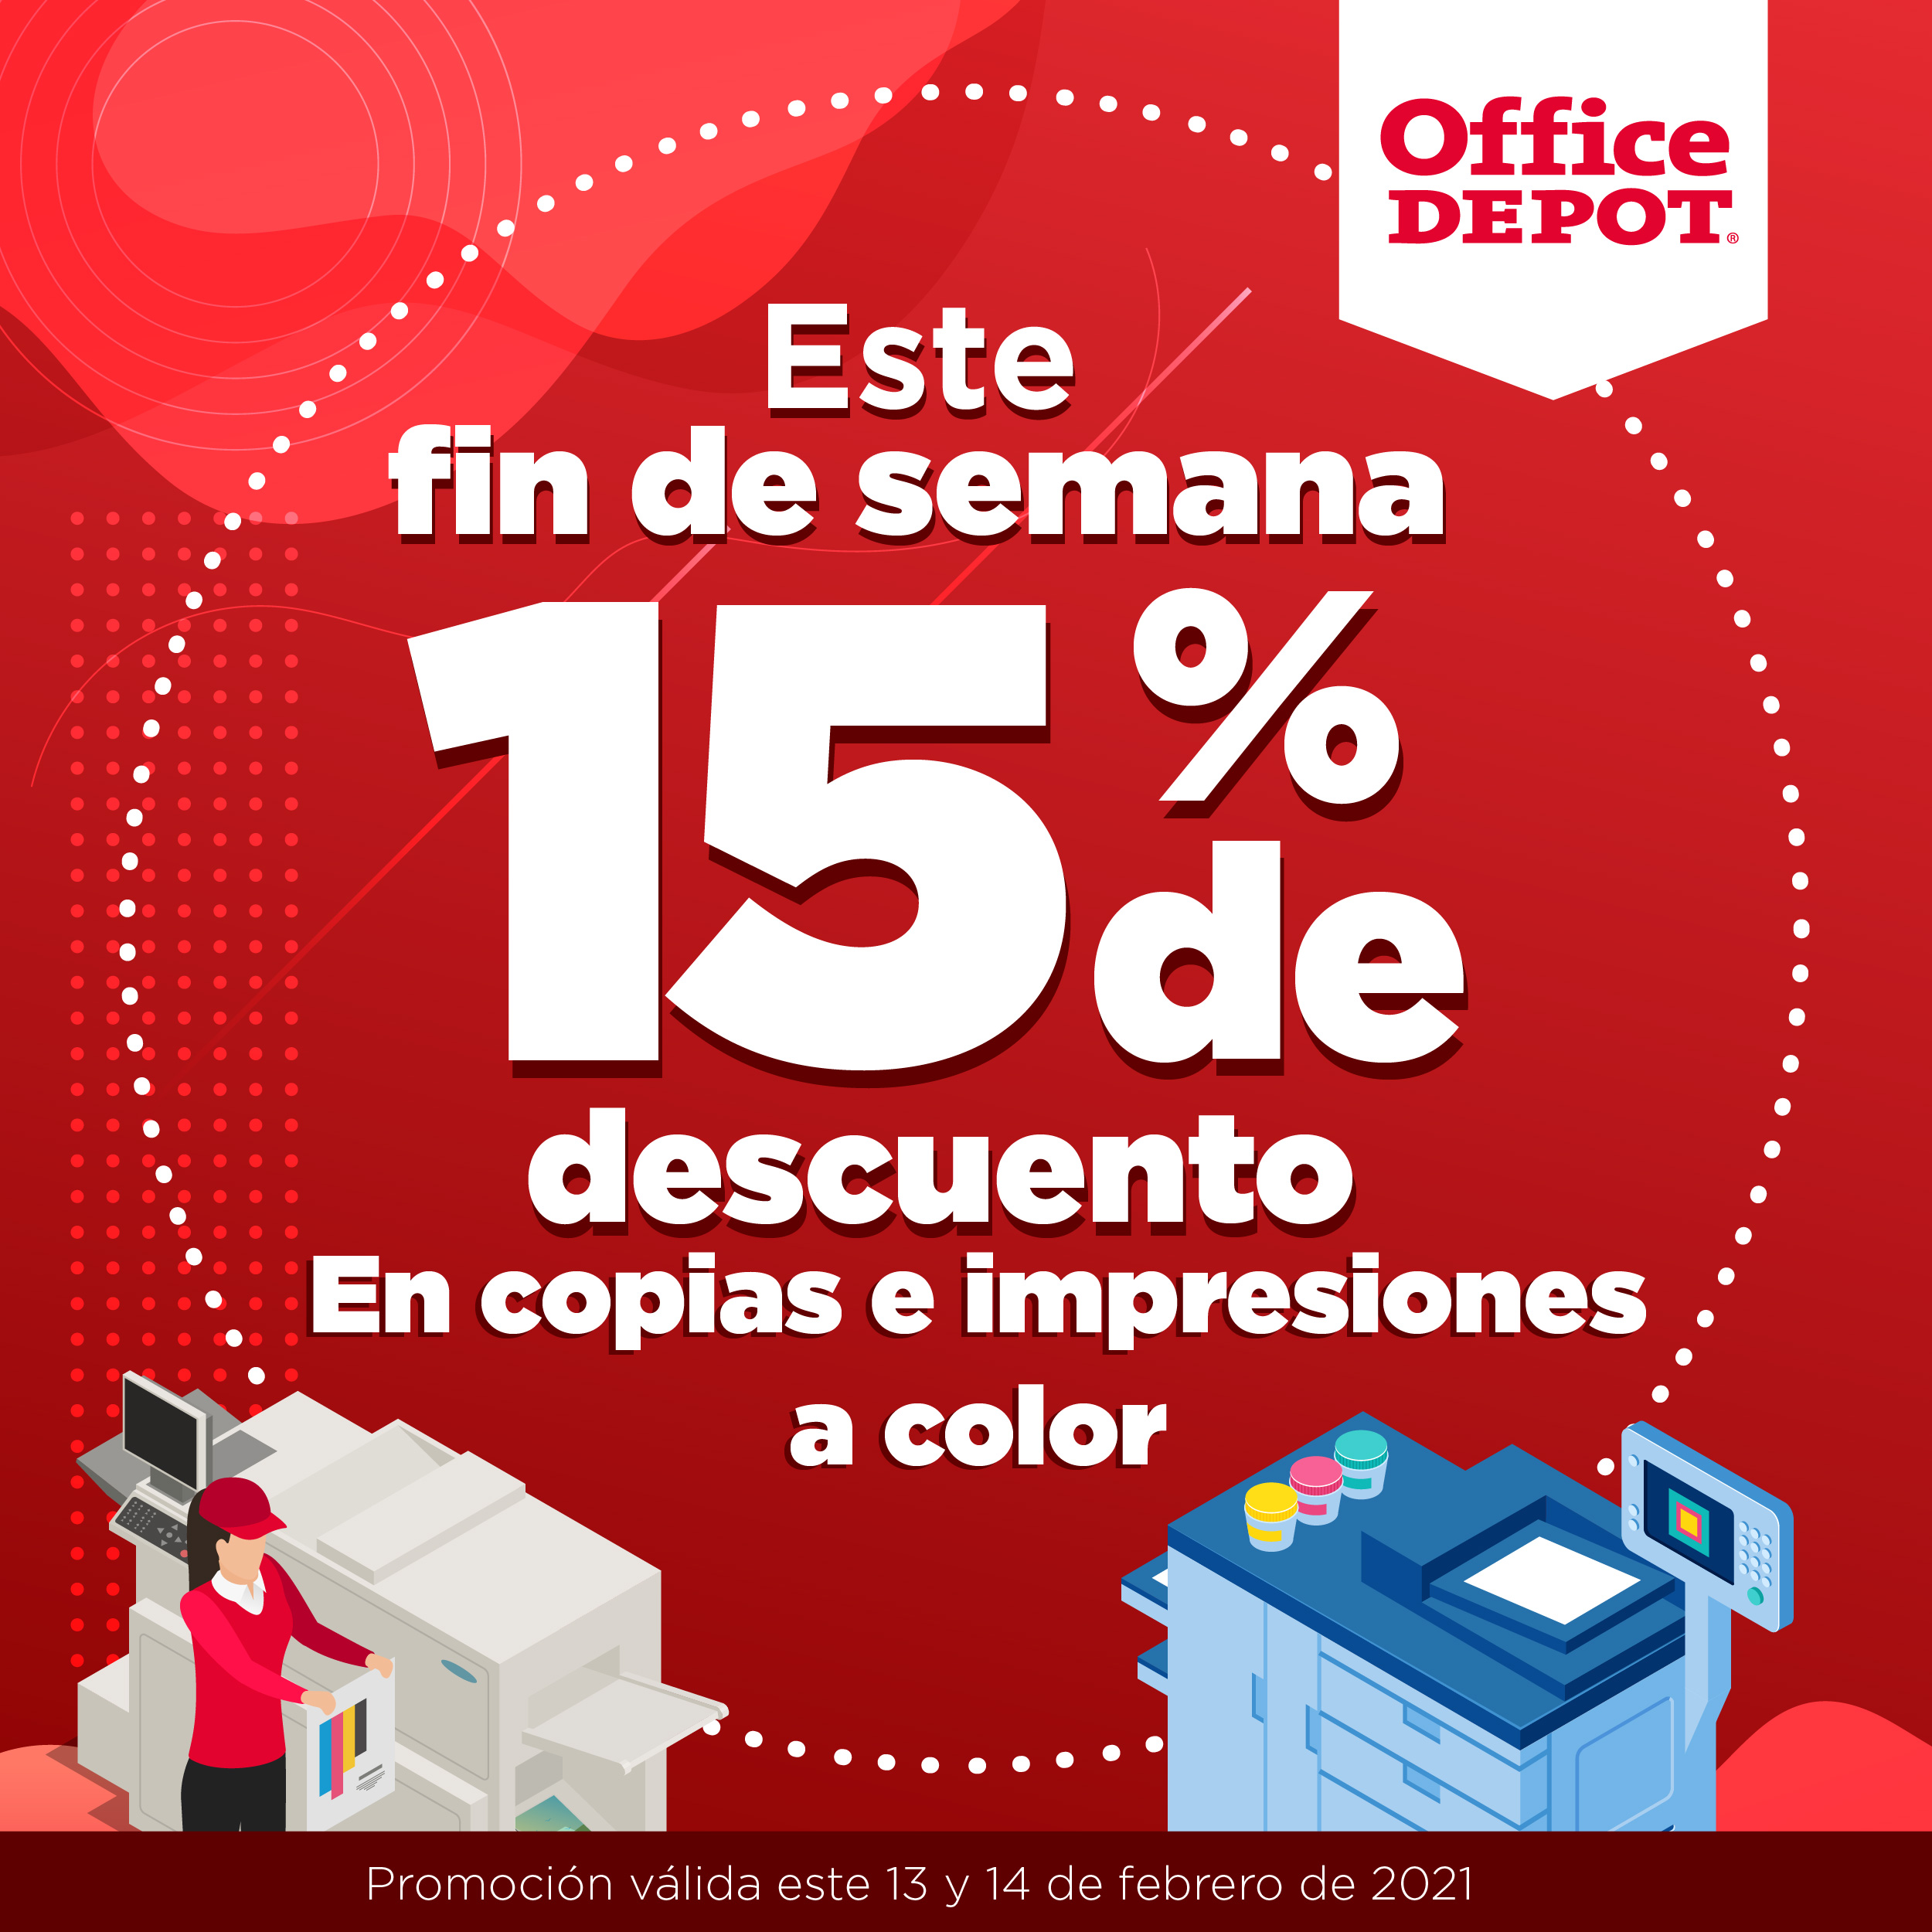 Office Depot Guatemala on Twitter: 